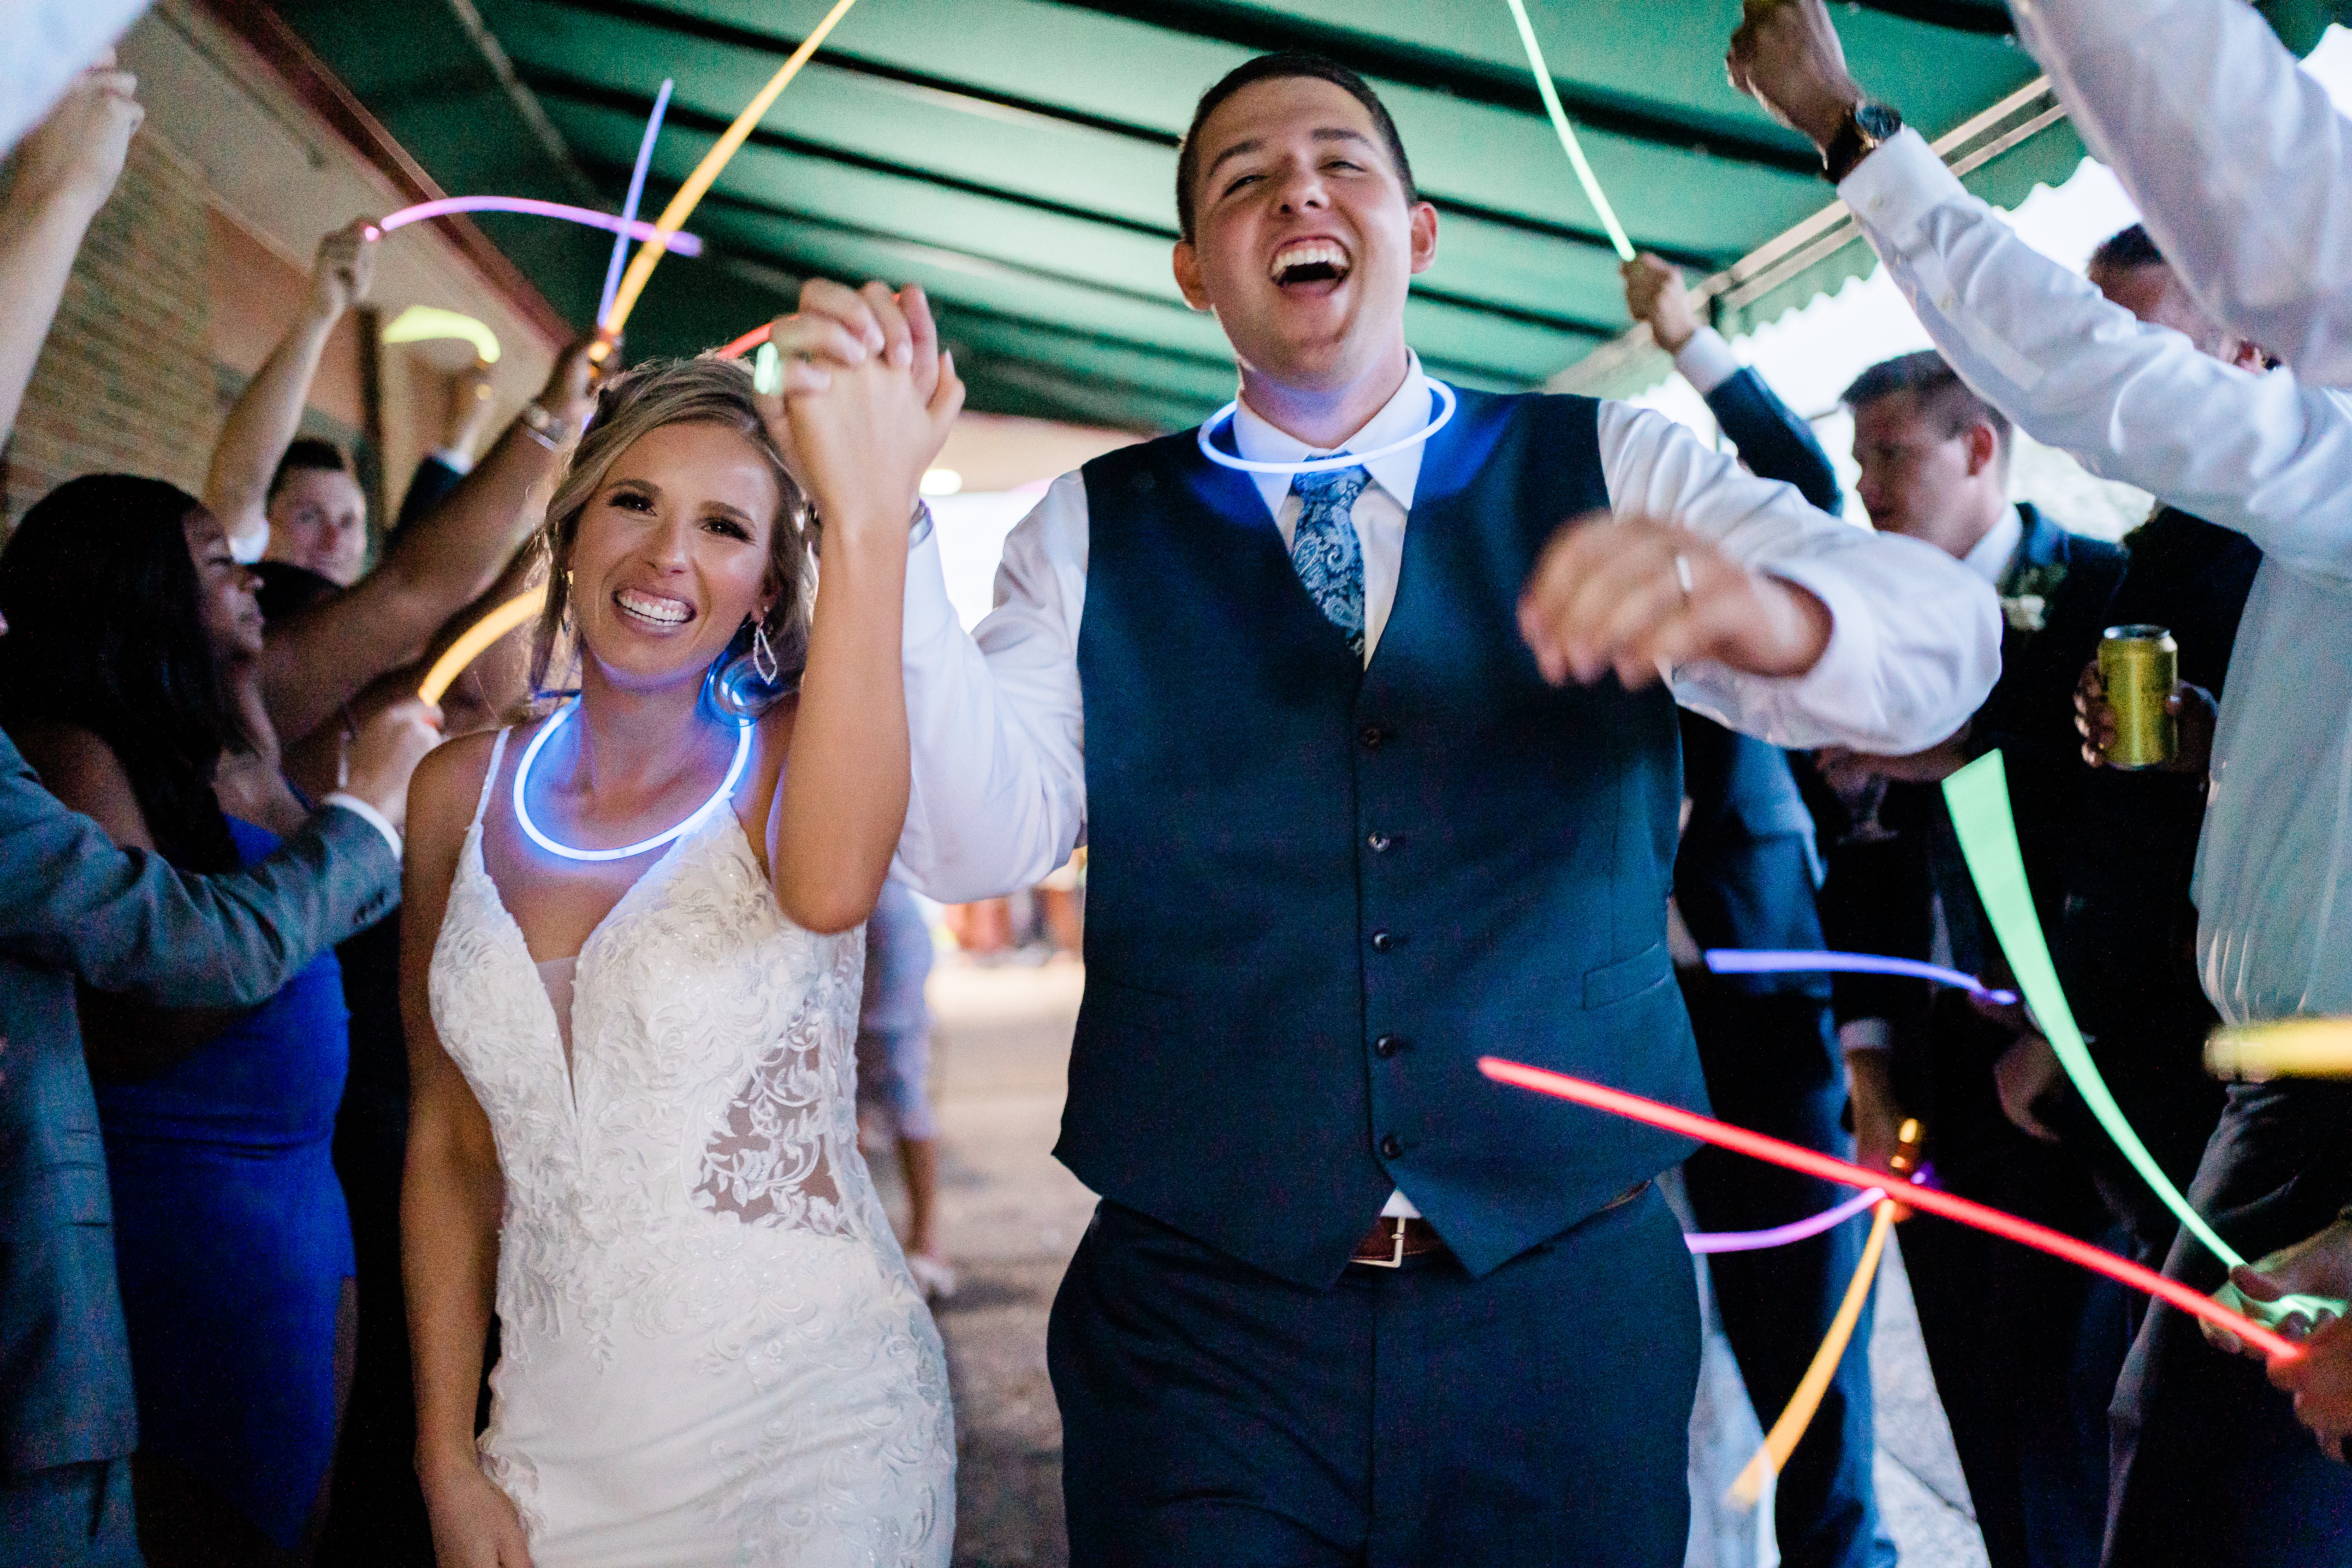 Fort Wayne wedding photographer captures bride and groom leaving wedding with wedding send off ideas - glow sticks!